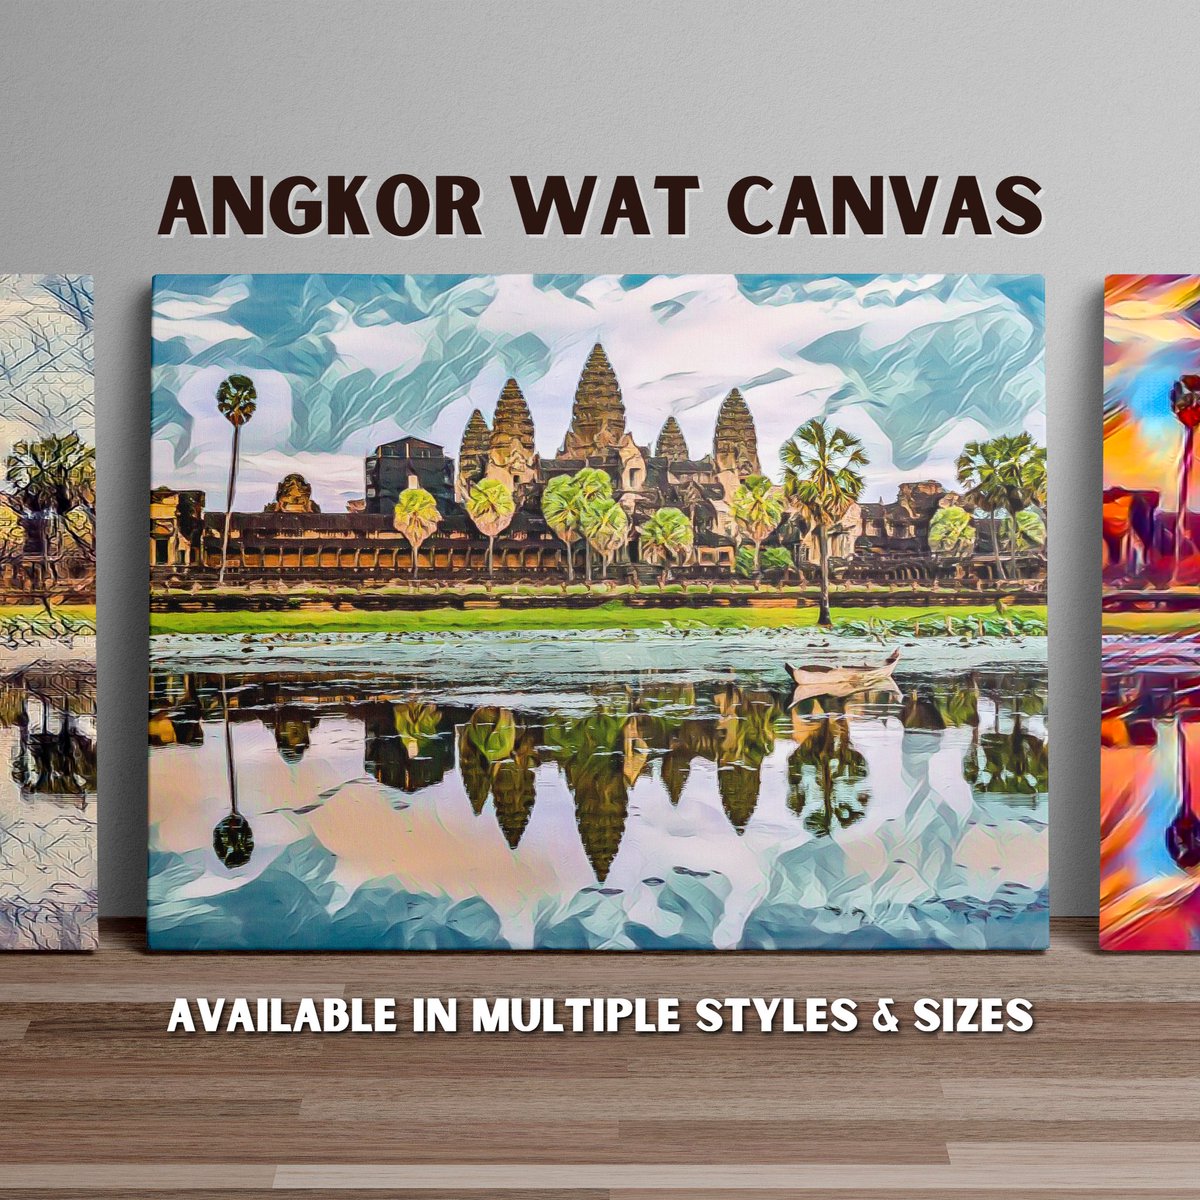 Angkor Wat Canvas Wall Art Print

etsy.com/listing/138591…

#angkorwat #cambodia #canvaswallart #travelprint #travelgift #traveldecor